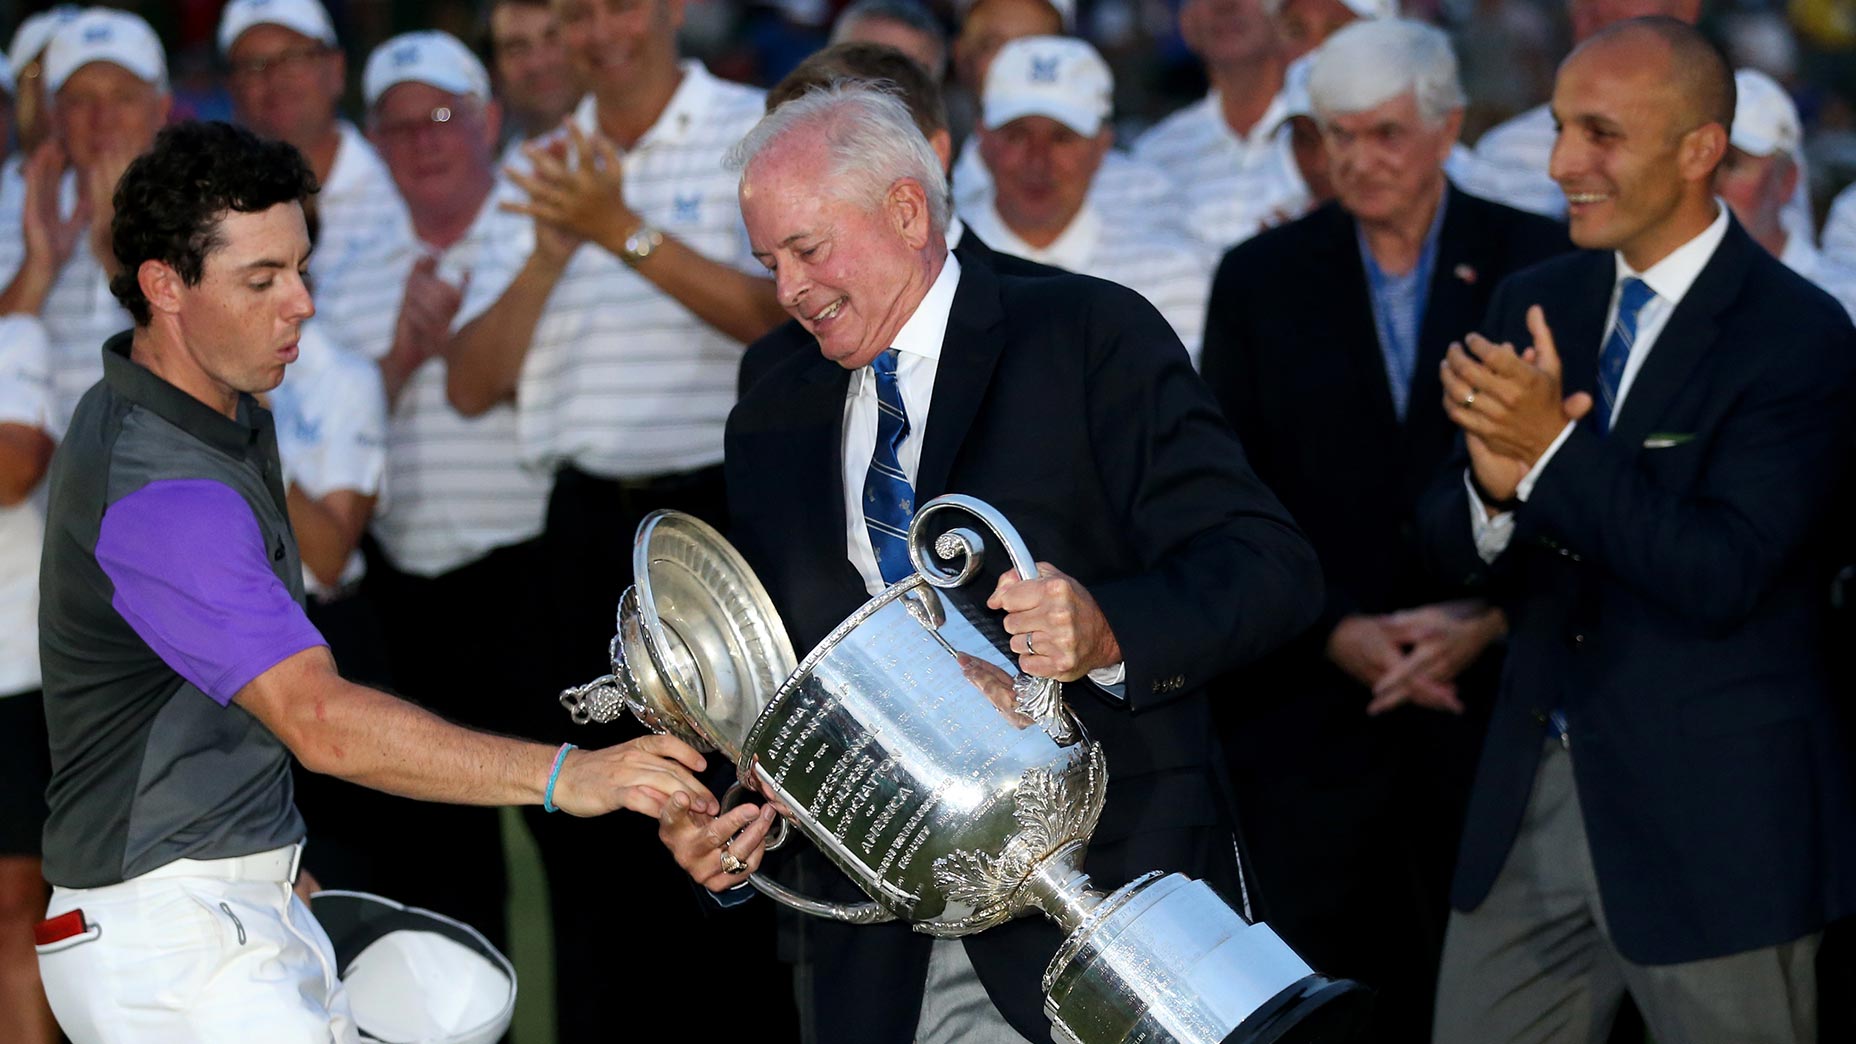 Pro golfer rory mcilroy drops wanamaker trophy at 2014 PGA championship.